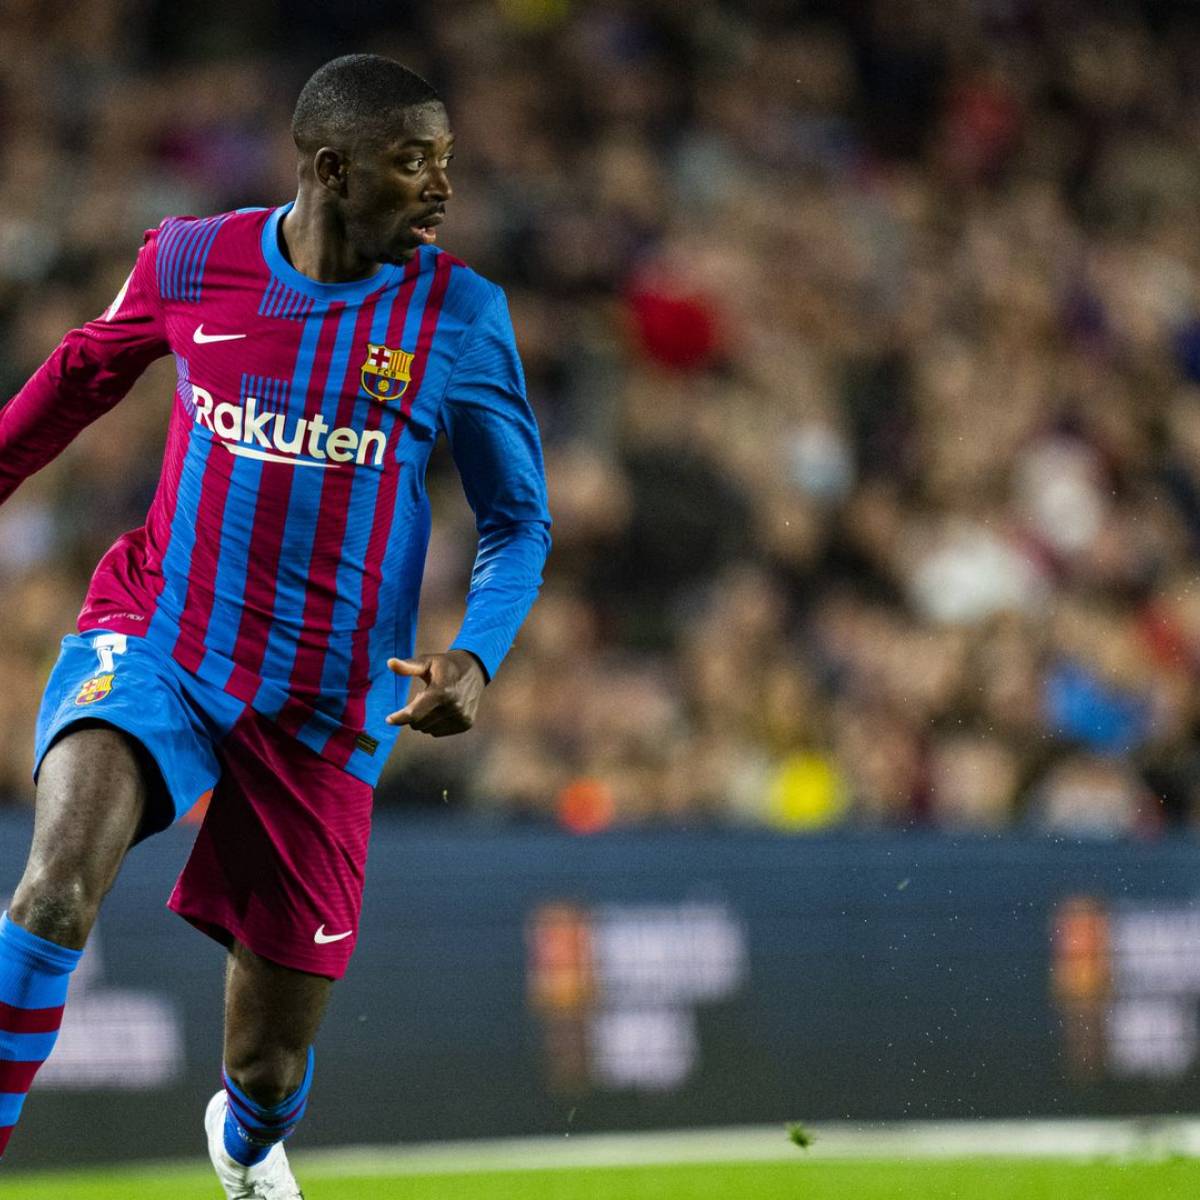 Fichajes FC Barcelona | Los detalles de la renovación de Ousmane Dembélé